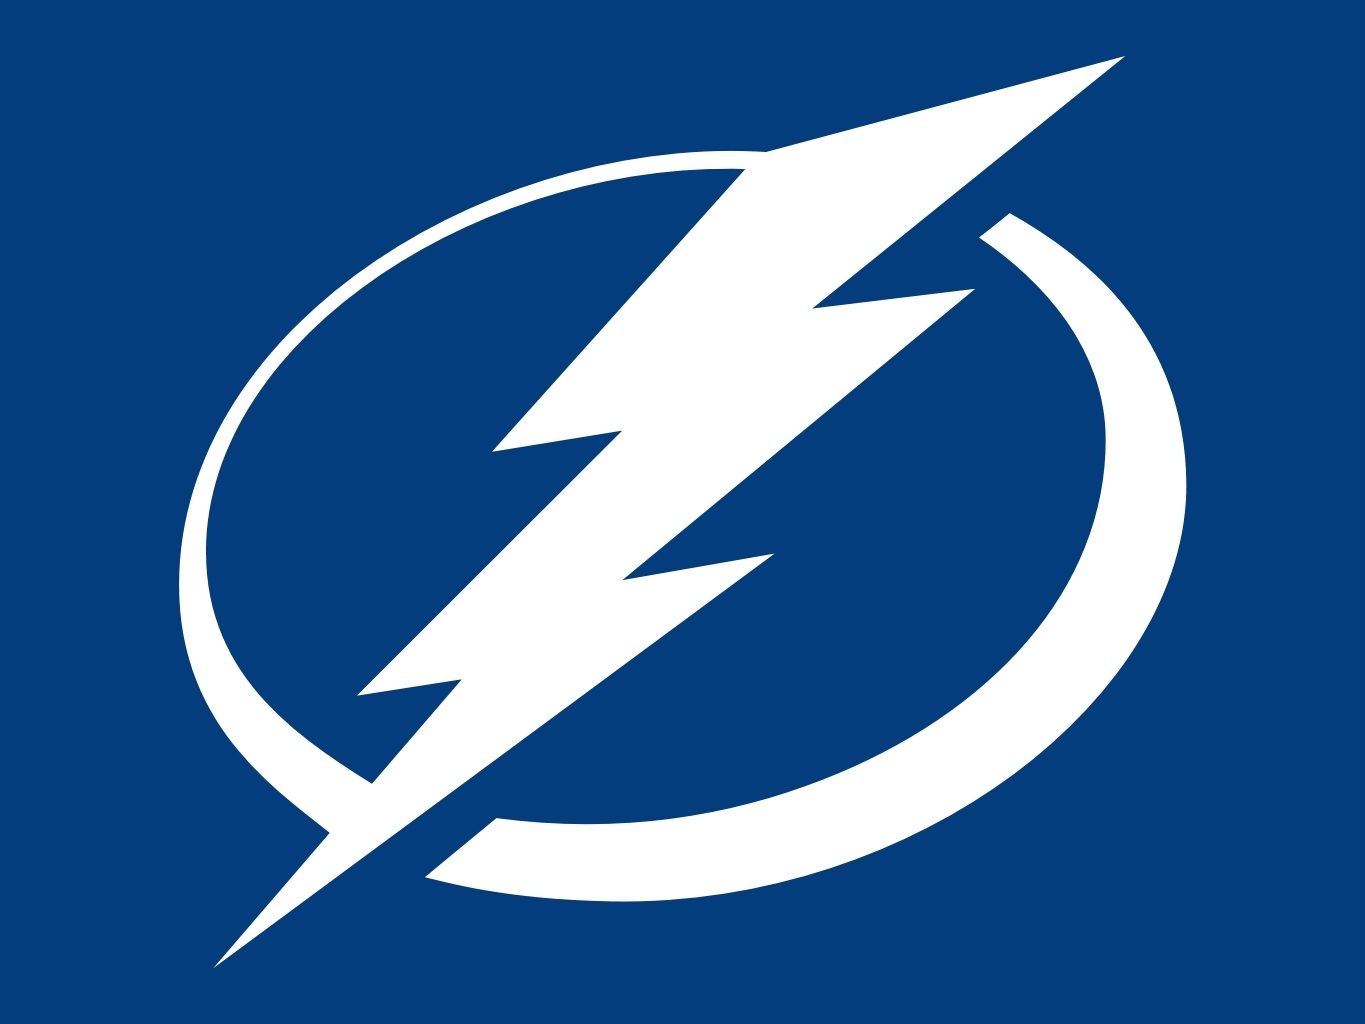 Tampa Bay Lightning | Sports Teams Wiki | Fandom